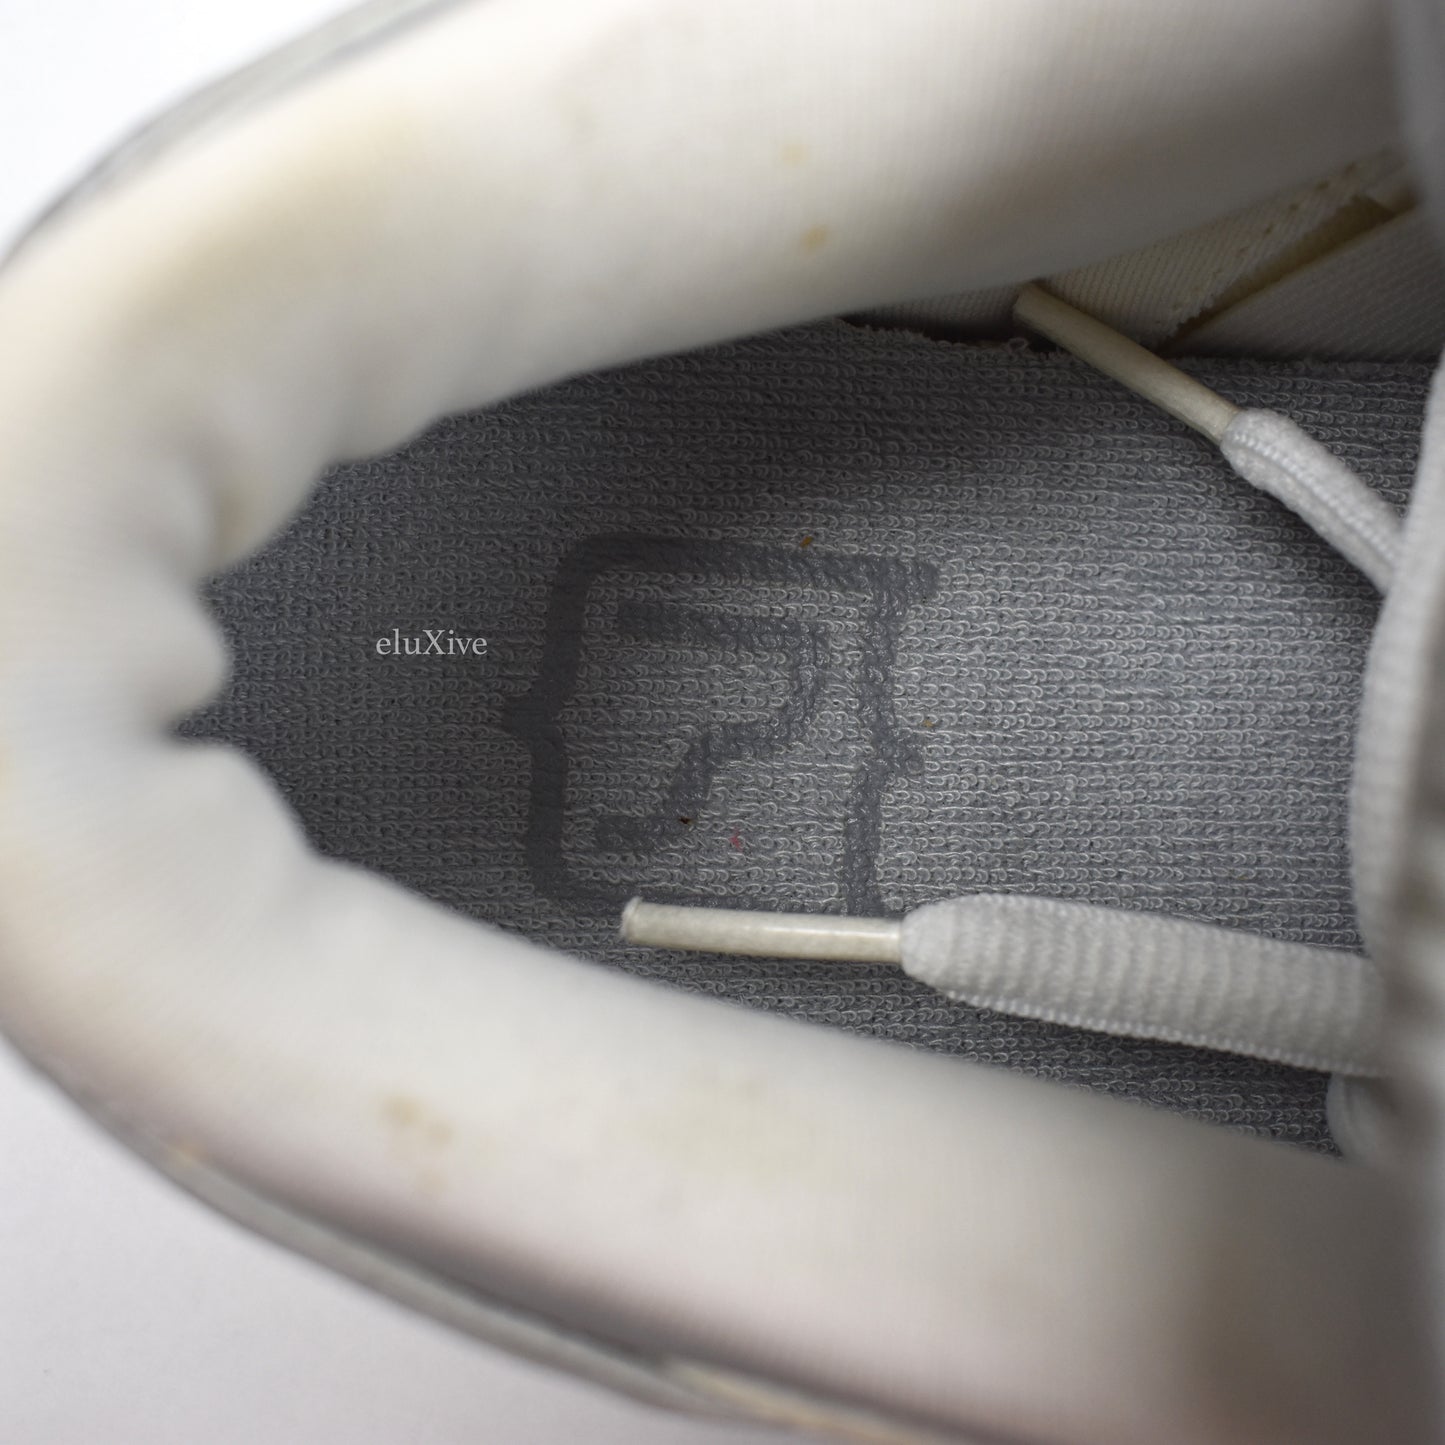 Nike - Dunk Low Pro SB 'Medicom 3'